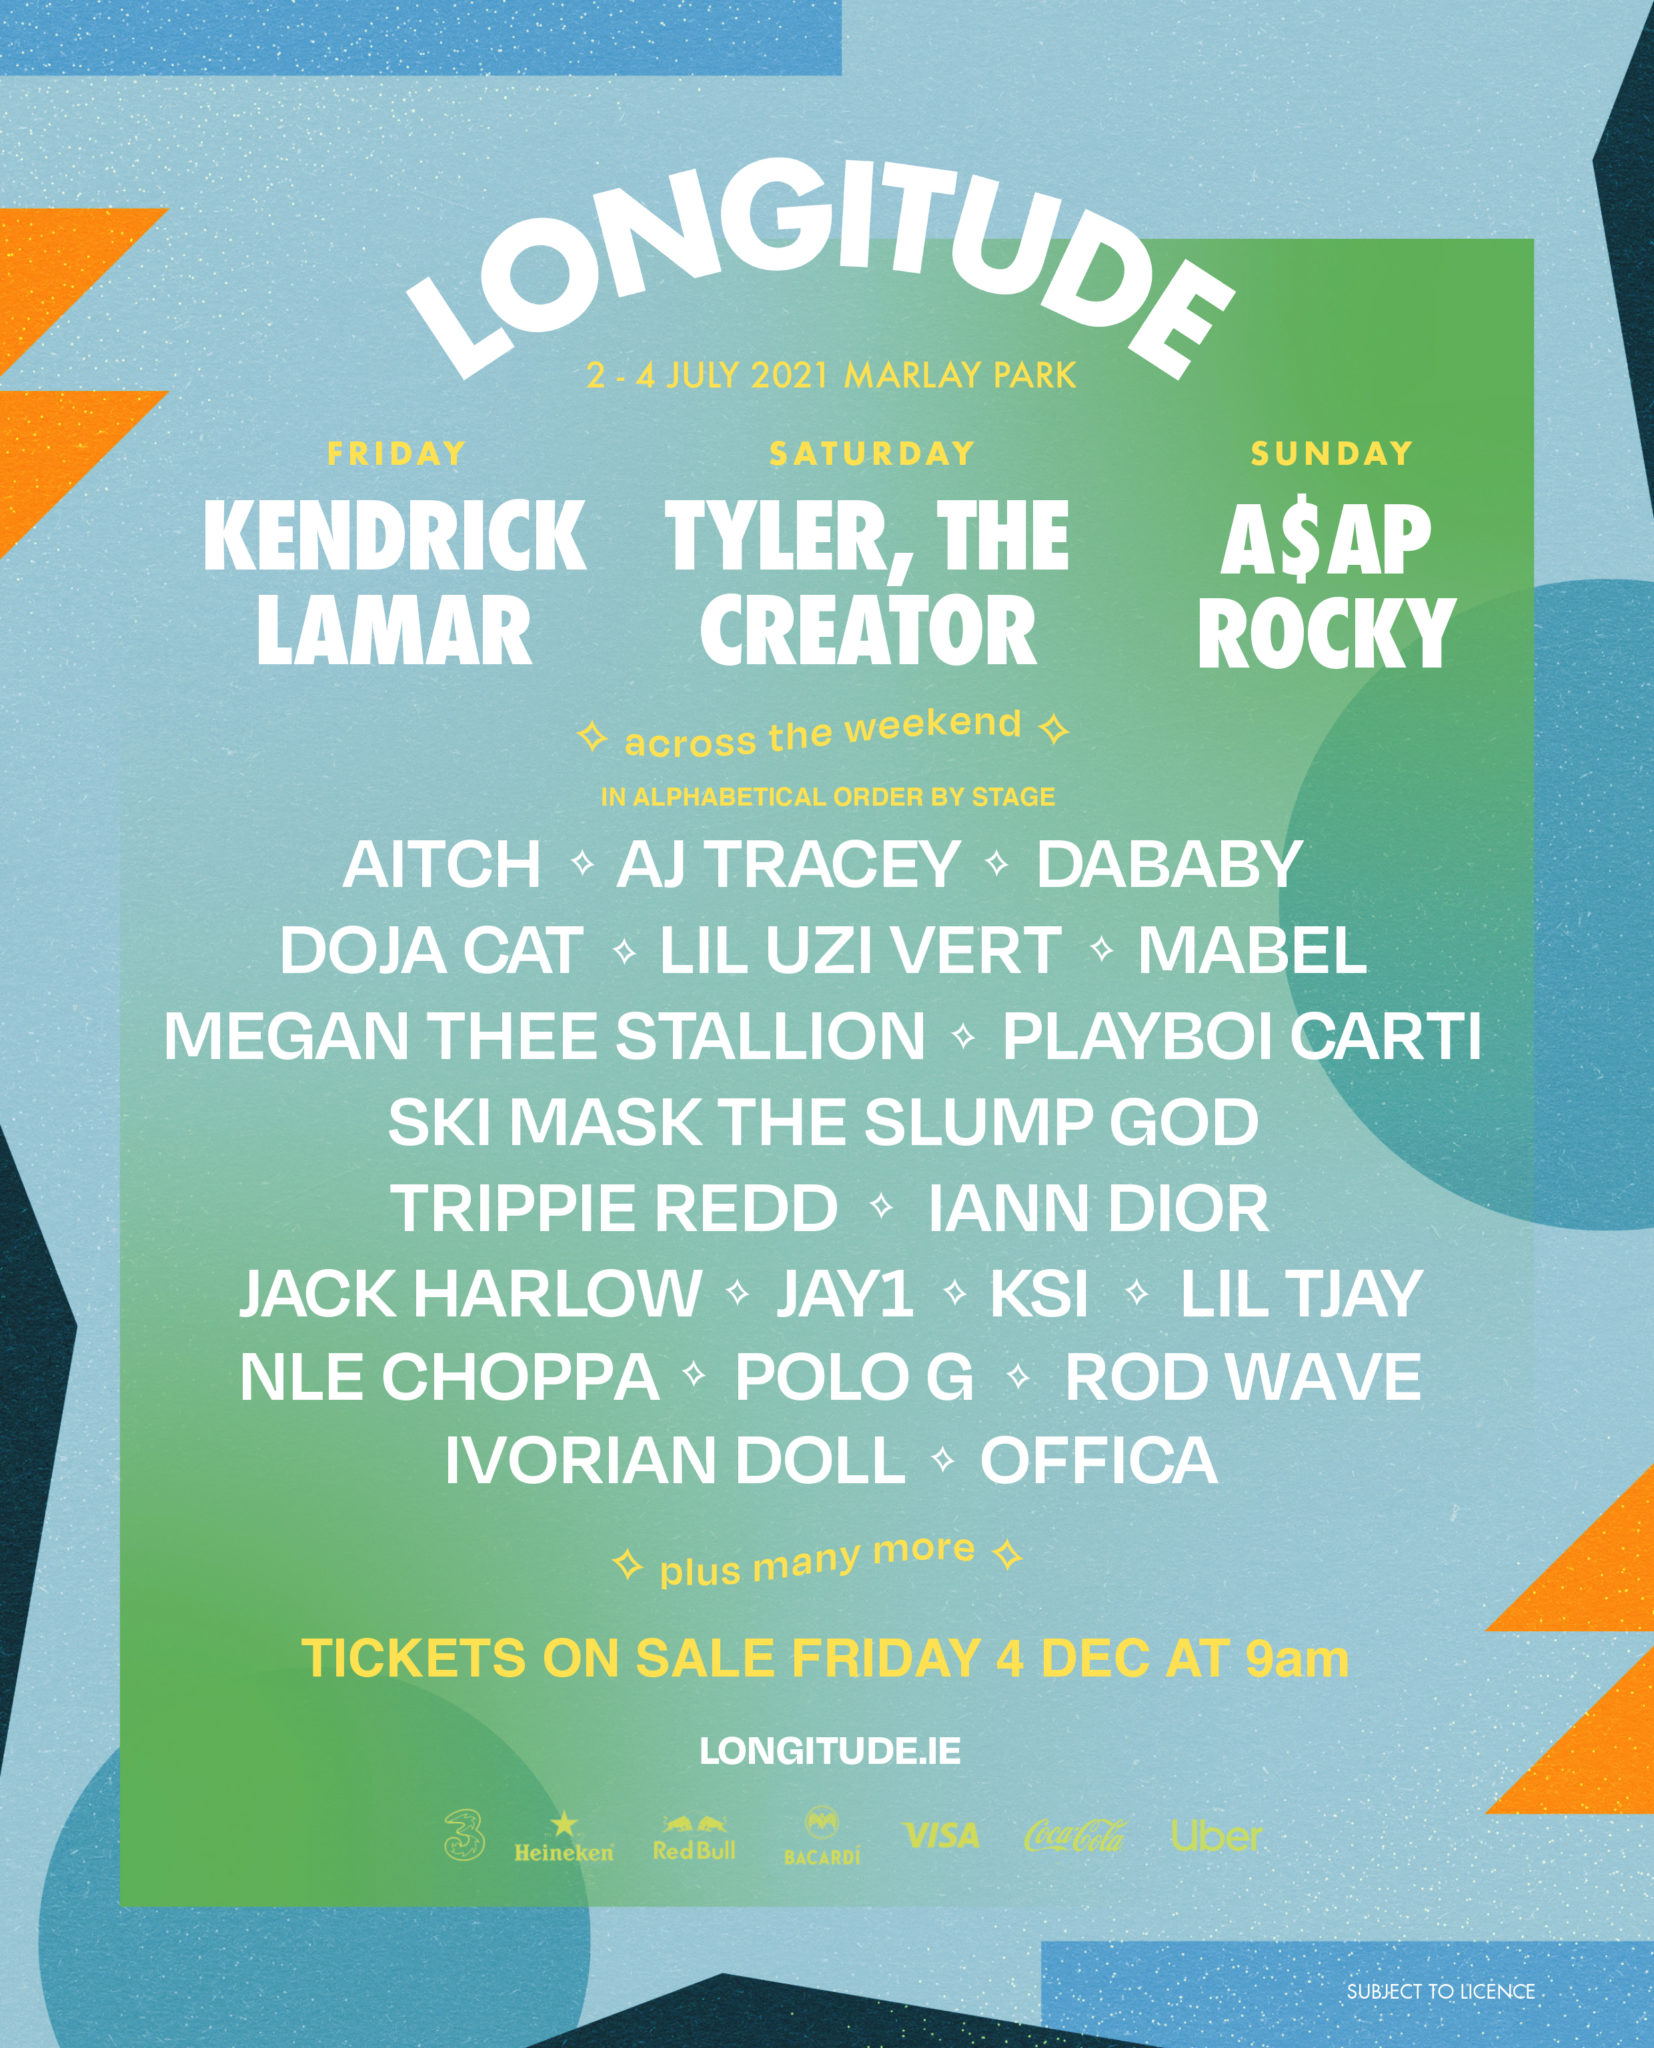 Longitude 2021 Lineup Announced Kendrick Lamar, AAP Rocky Included